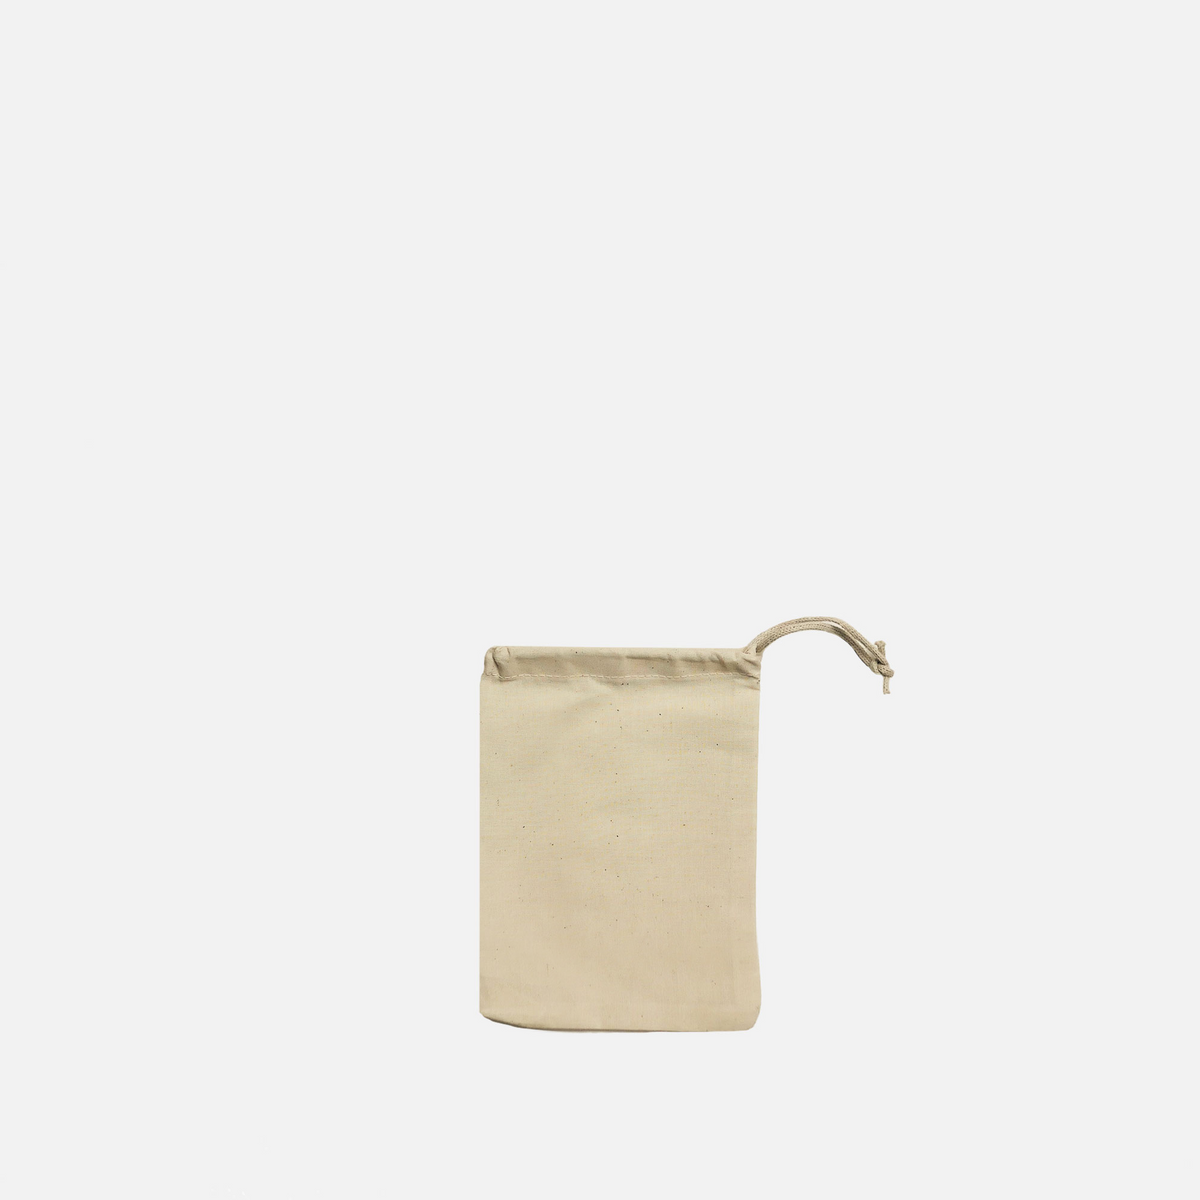 Small single drawstring bags 5x7 inches black/natural – EcoFriendlyCA